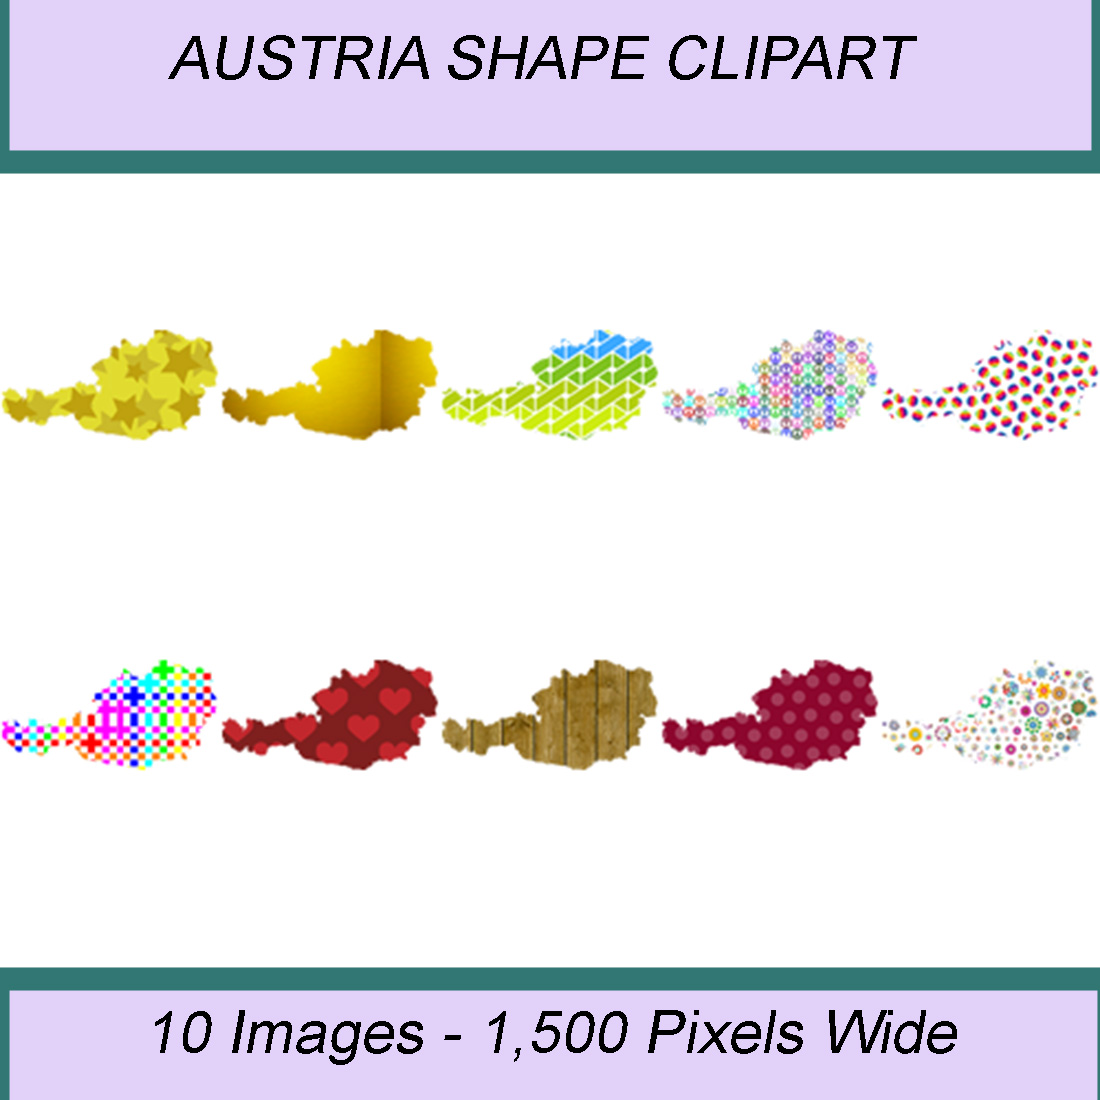 AUSTRIA SHAPE CLIPART ICONS cover image.